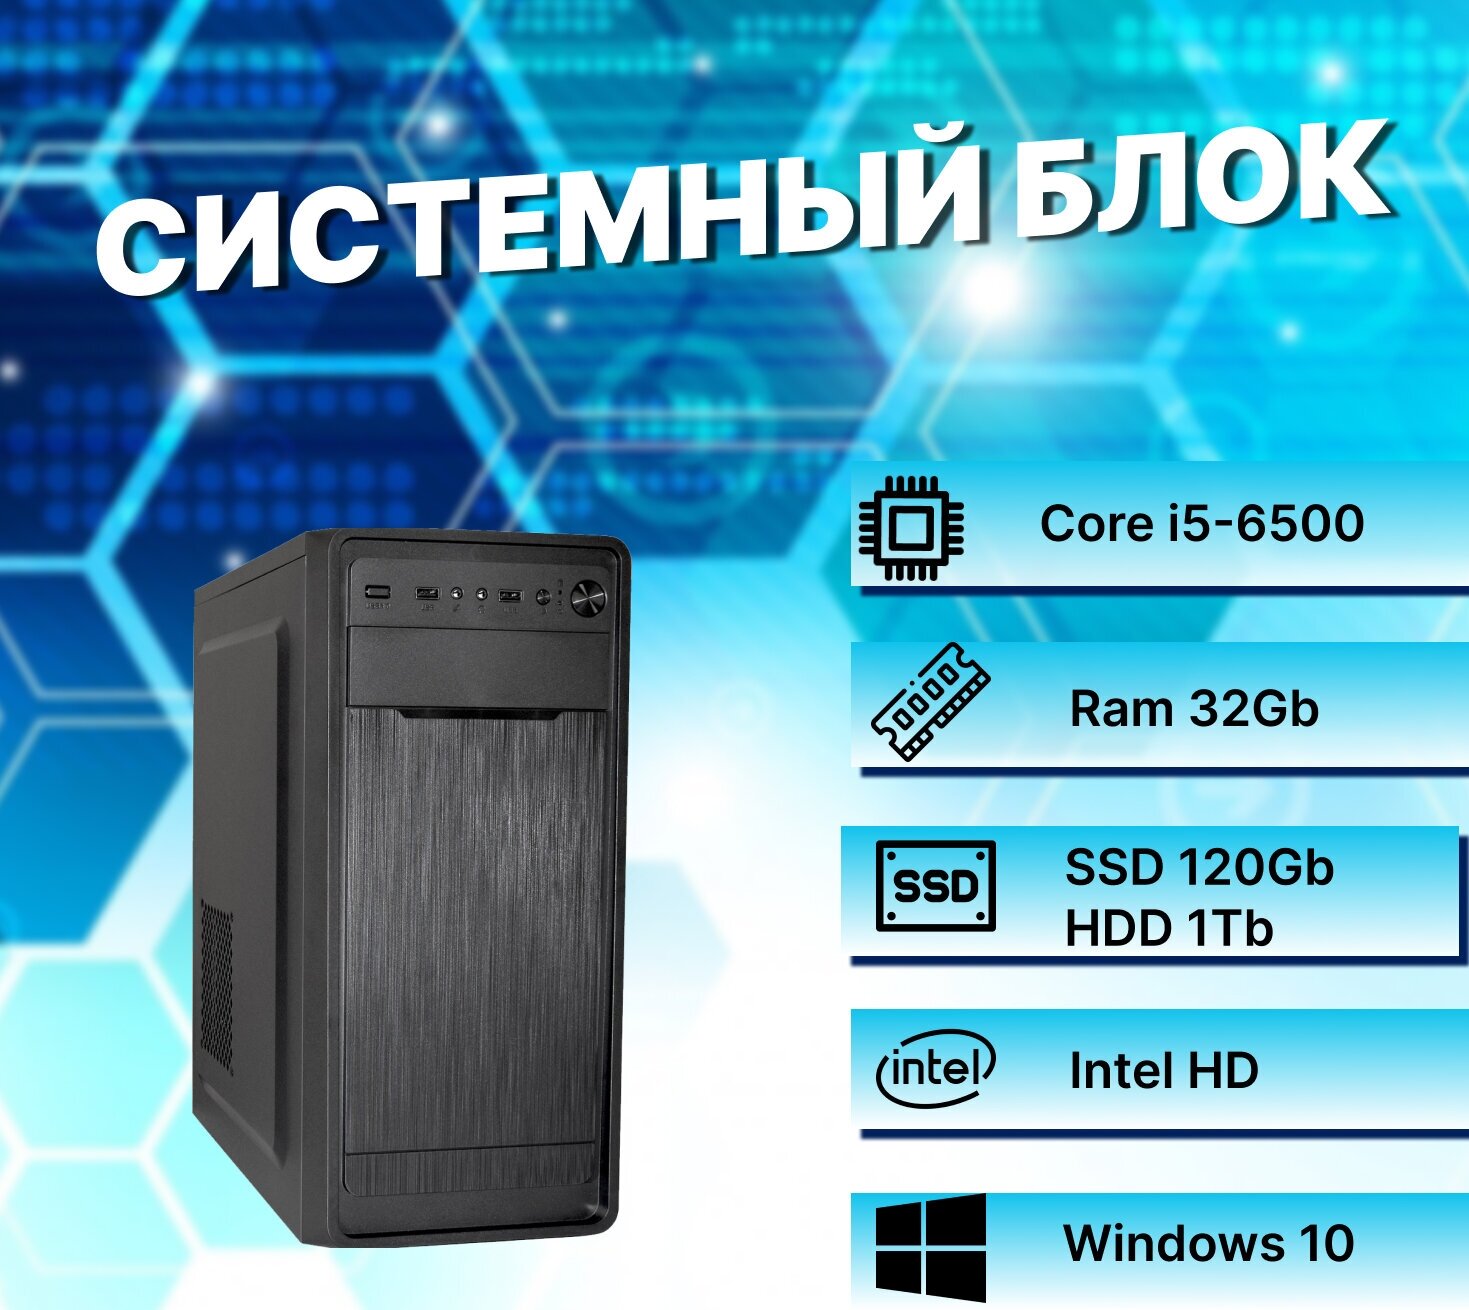 Системный блок Intel Core I5-6500 (3.2ГГц)/ RAM 32Gb/ SSD 120Gb/ HDD 1Tb/ Intel HD/ Windows 10 Pro